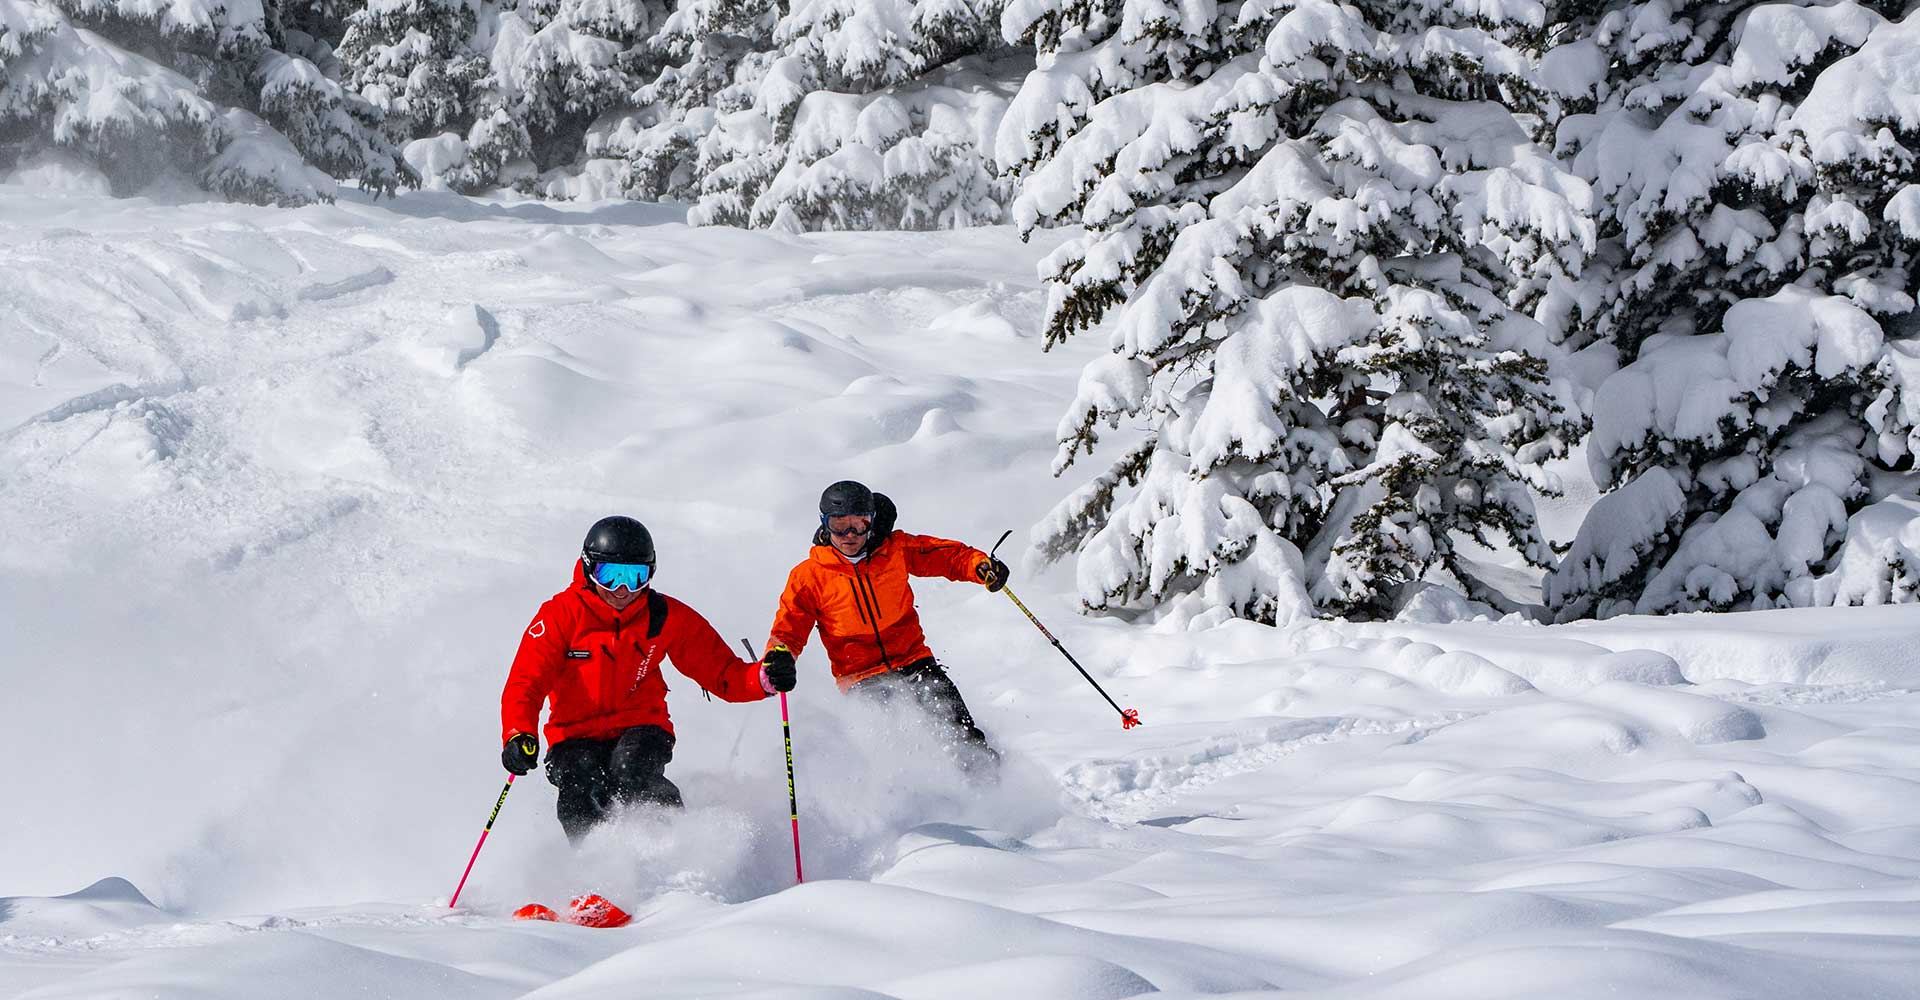 Skiers enjoy powder and bumps at Aspen Highlands